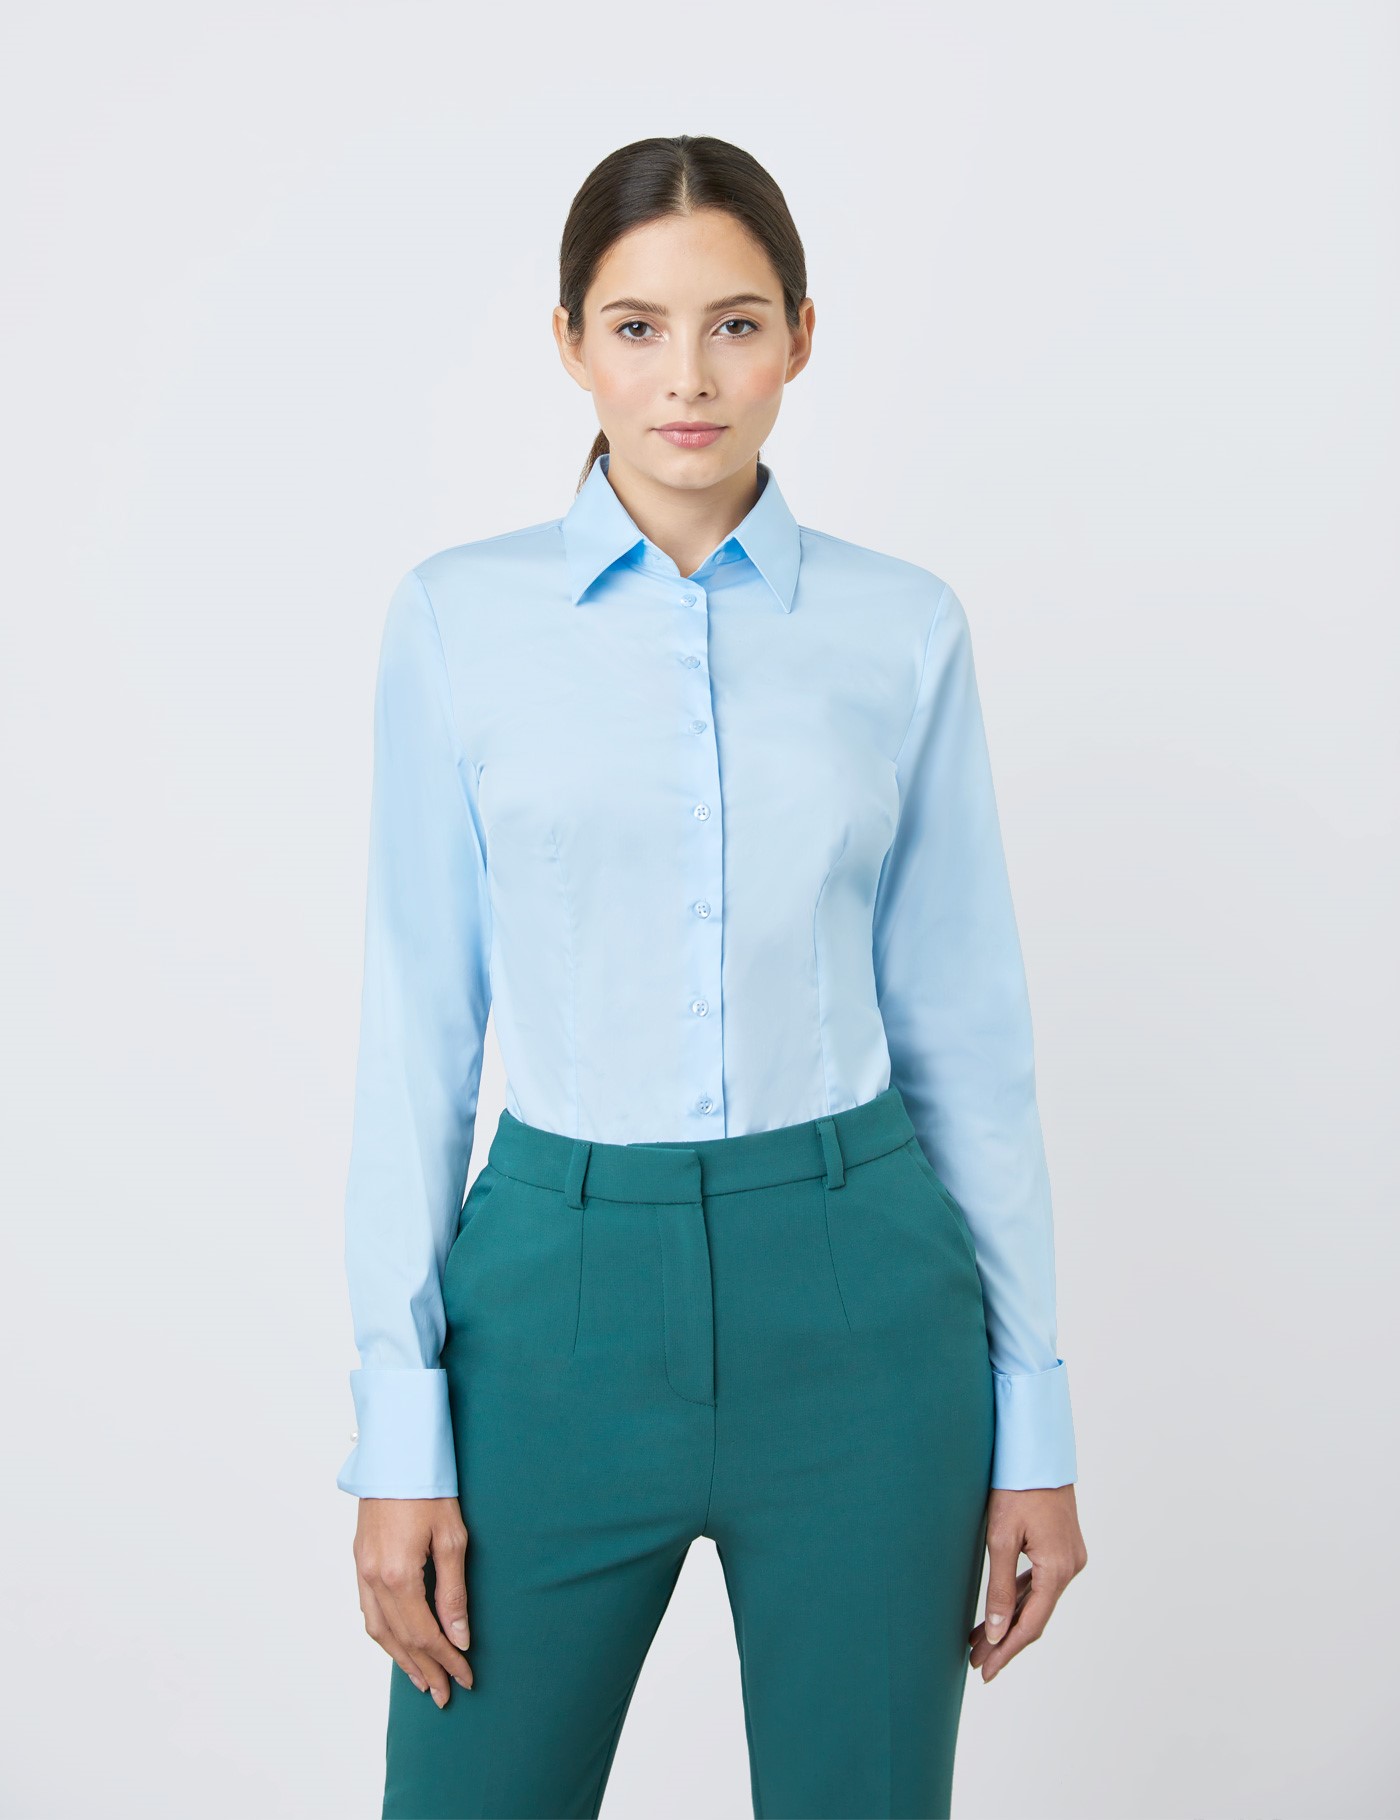 Jabeth Wilson datum Ochtend Women's Ice Blue Fitted Cotton Stretch Shirt - Double Cuff | Hawes & Curtis